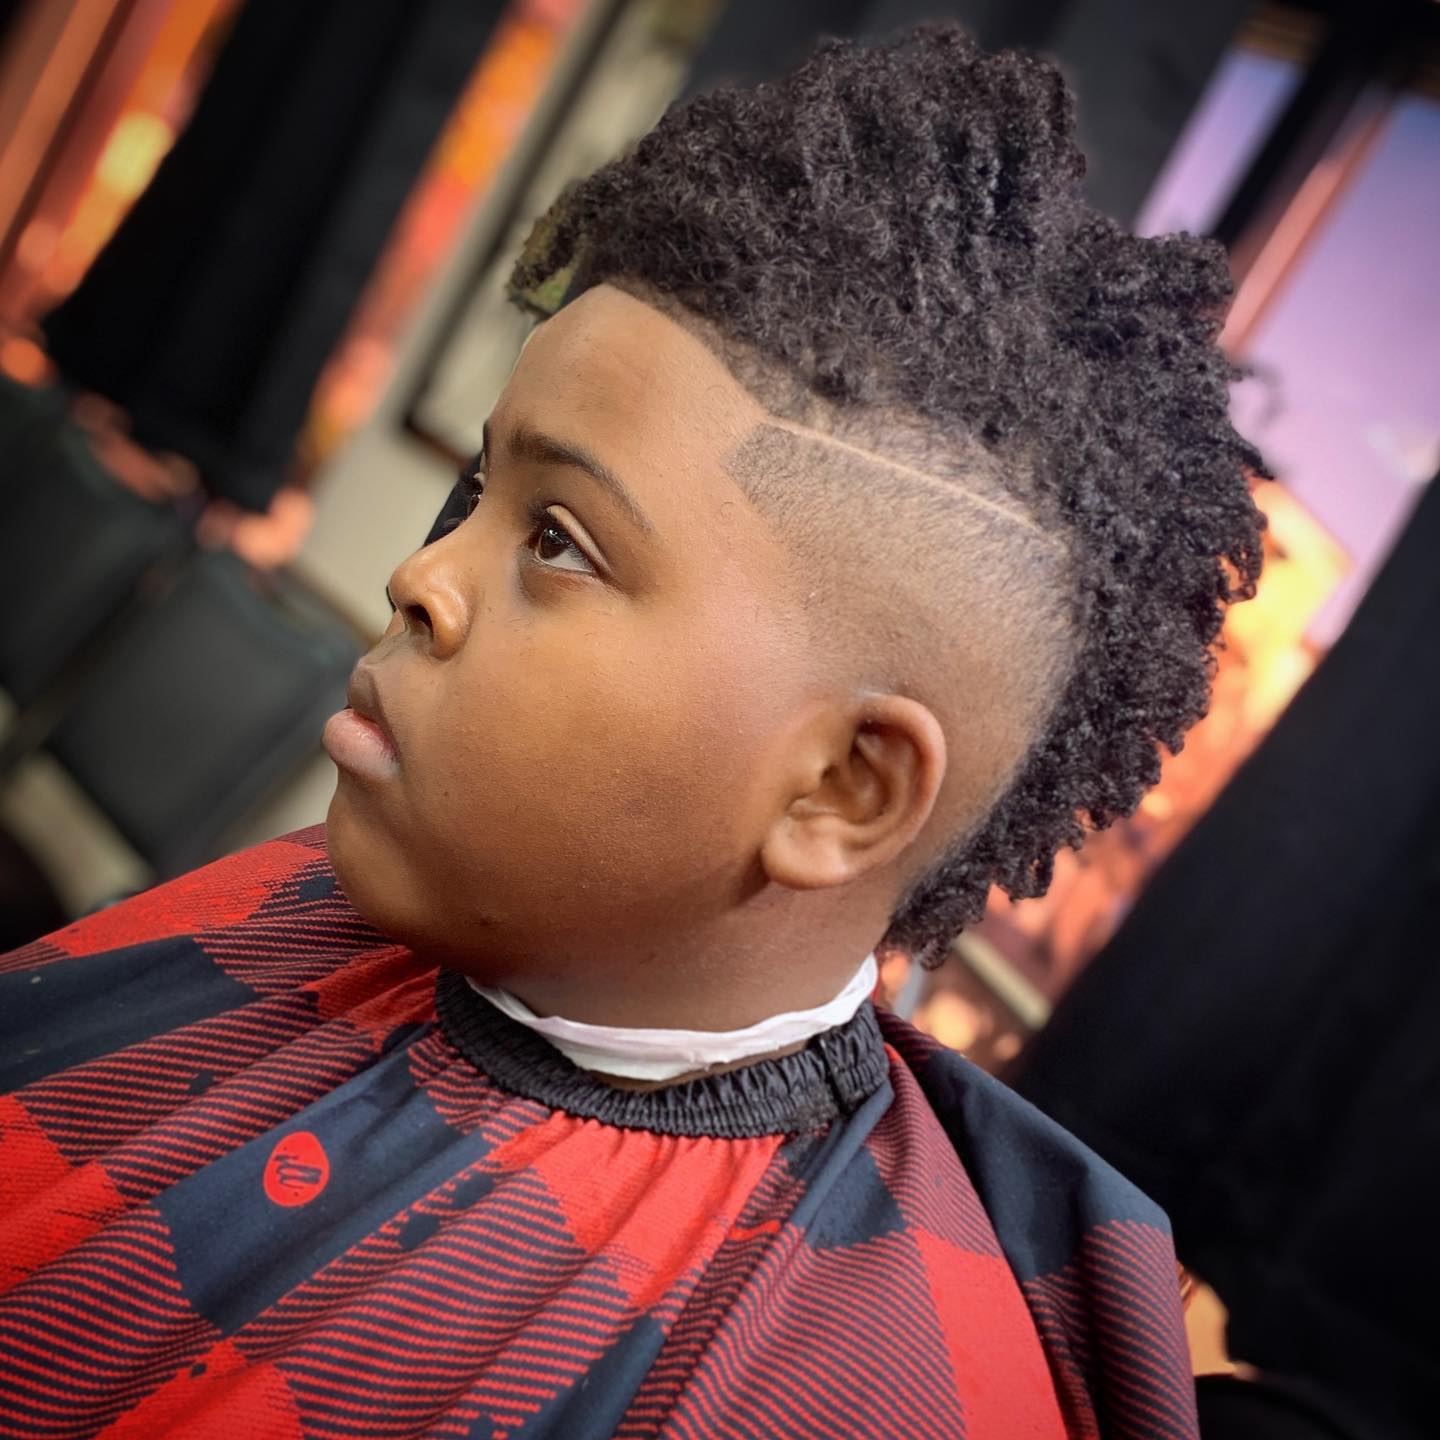 Black Boy with Mohawk Haircut